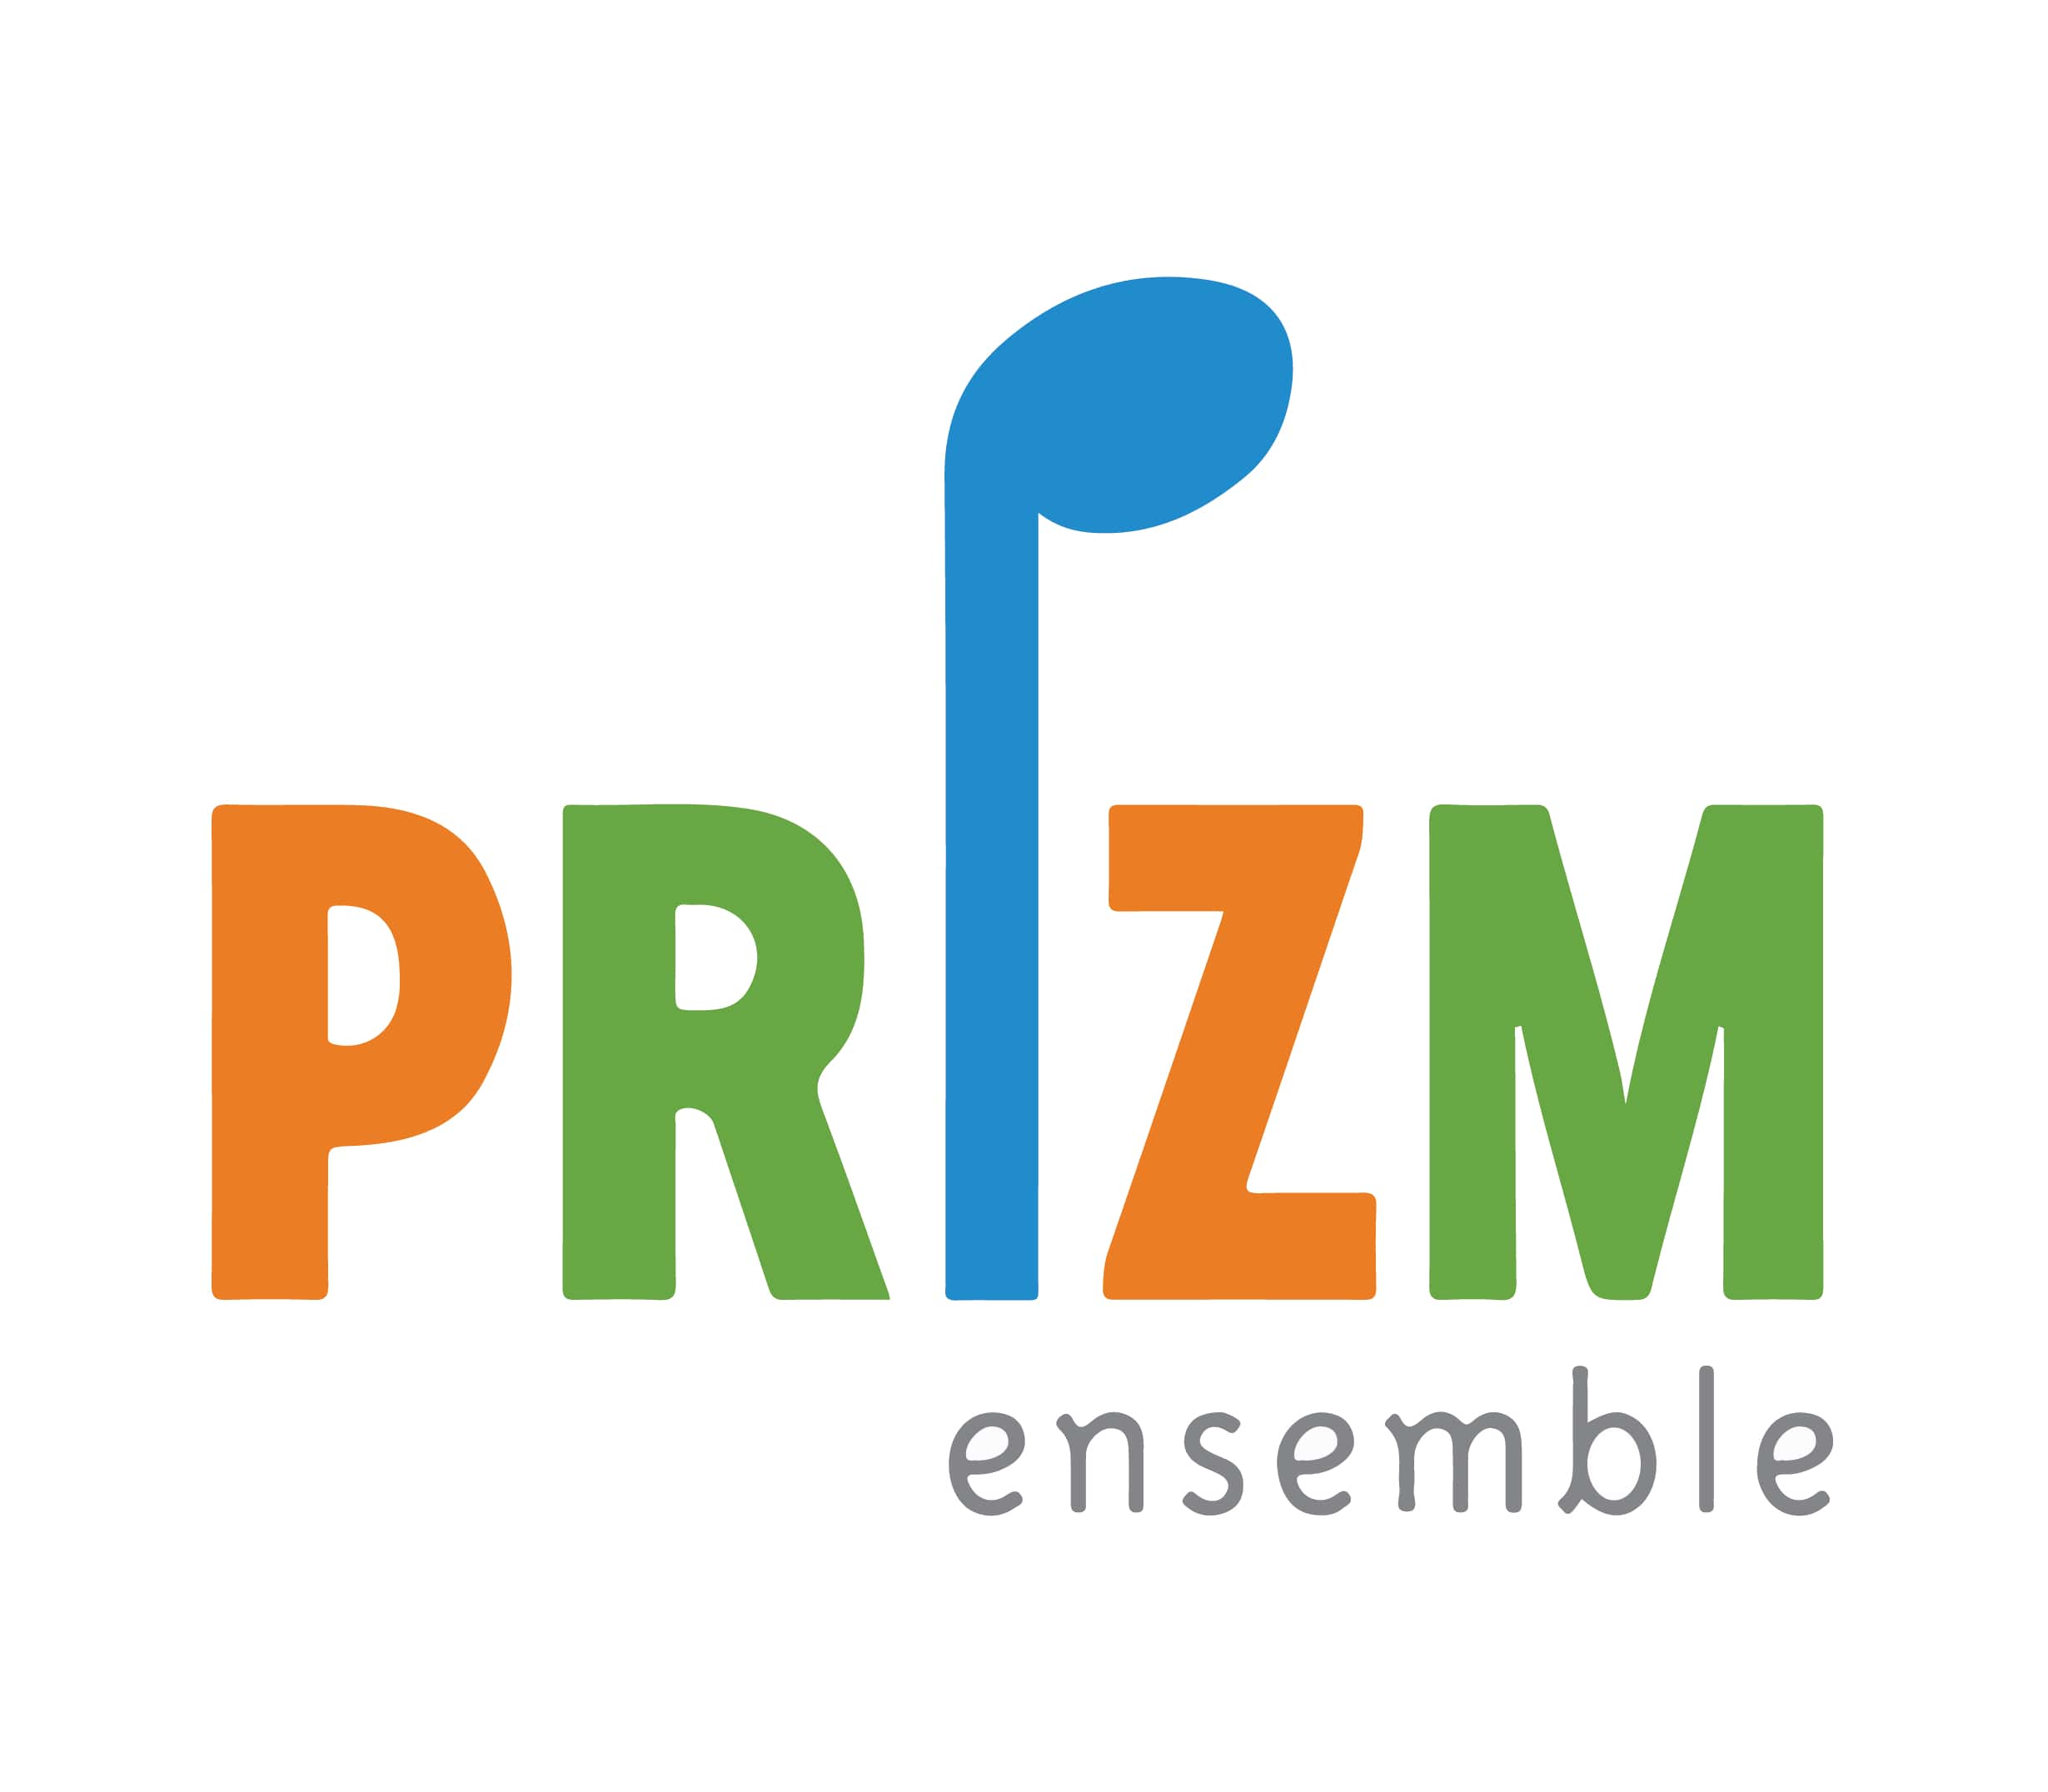 Prizm Logo - Center Stage: 2018 PRIZM Festival Concert